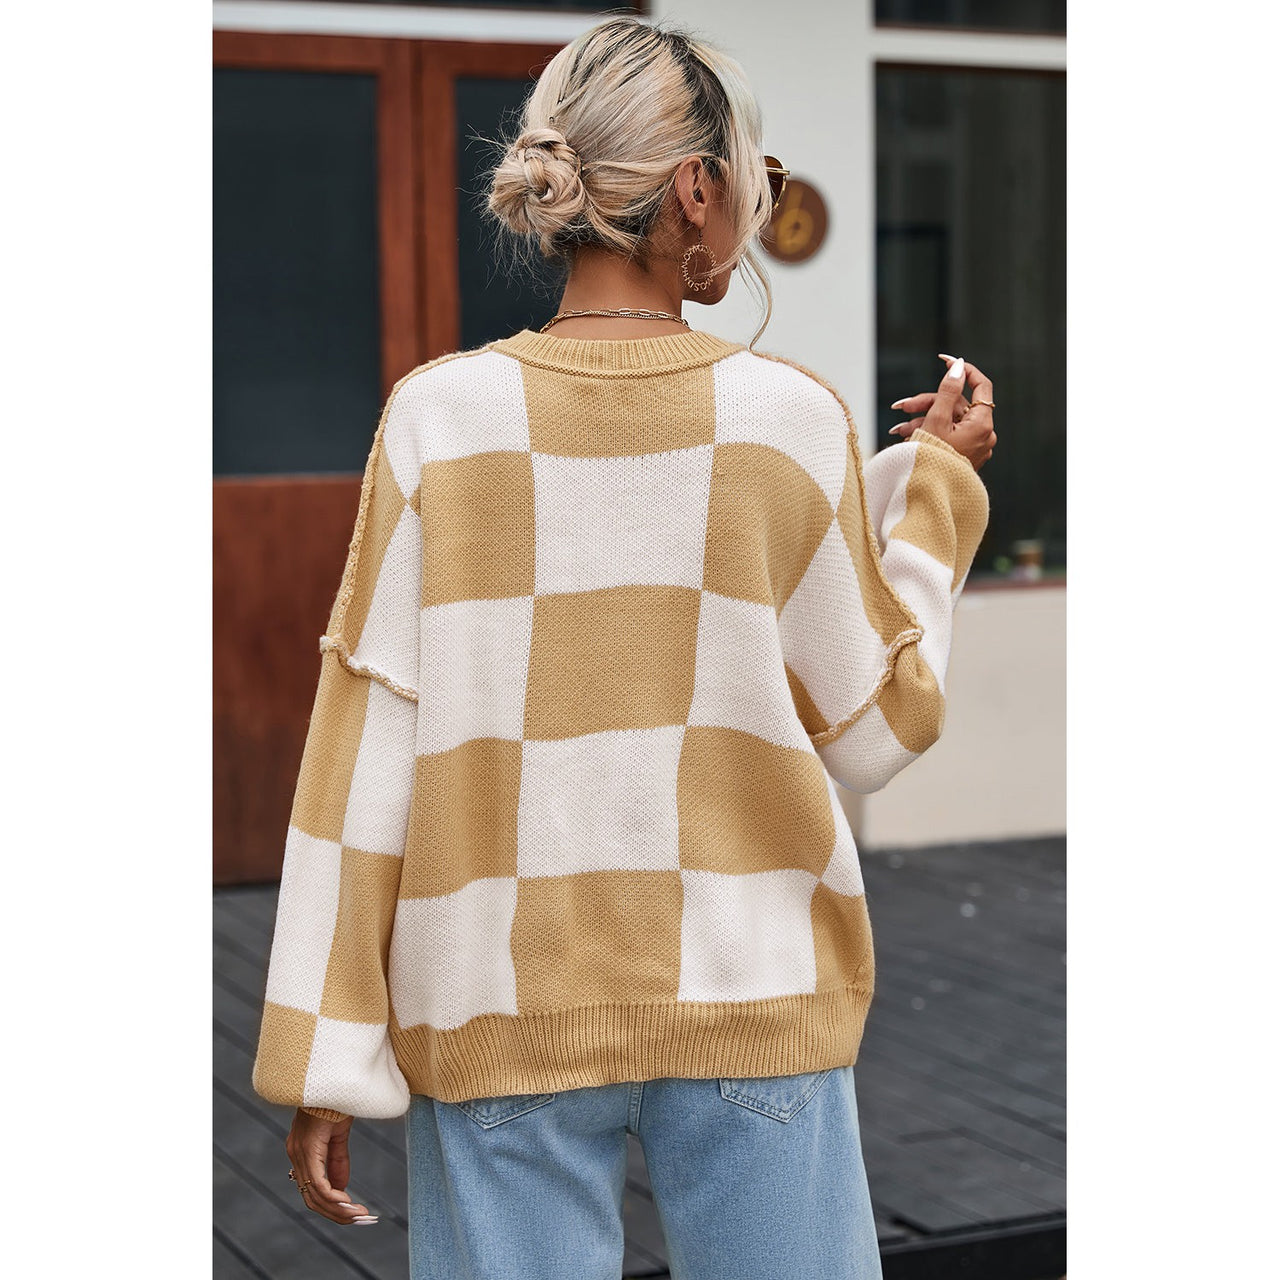 Dear Lover Women's Checkered Bishop Sleeve Sweater - Khaki